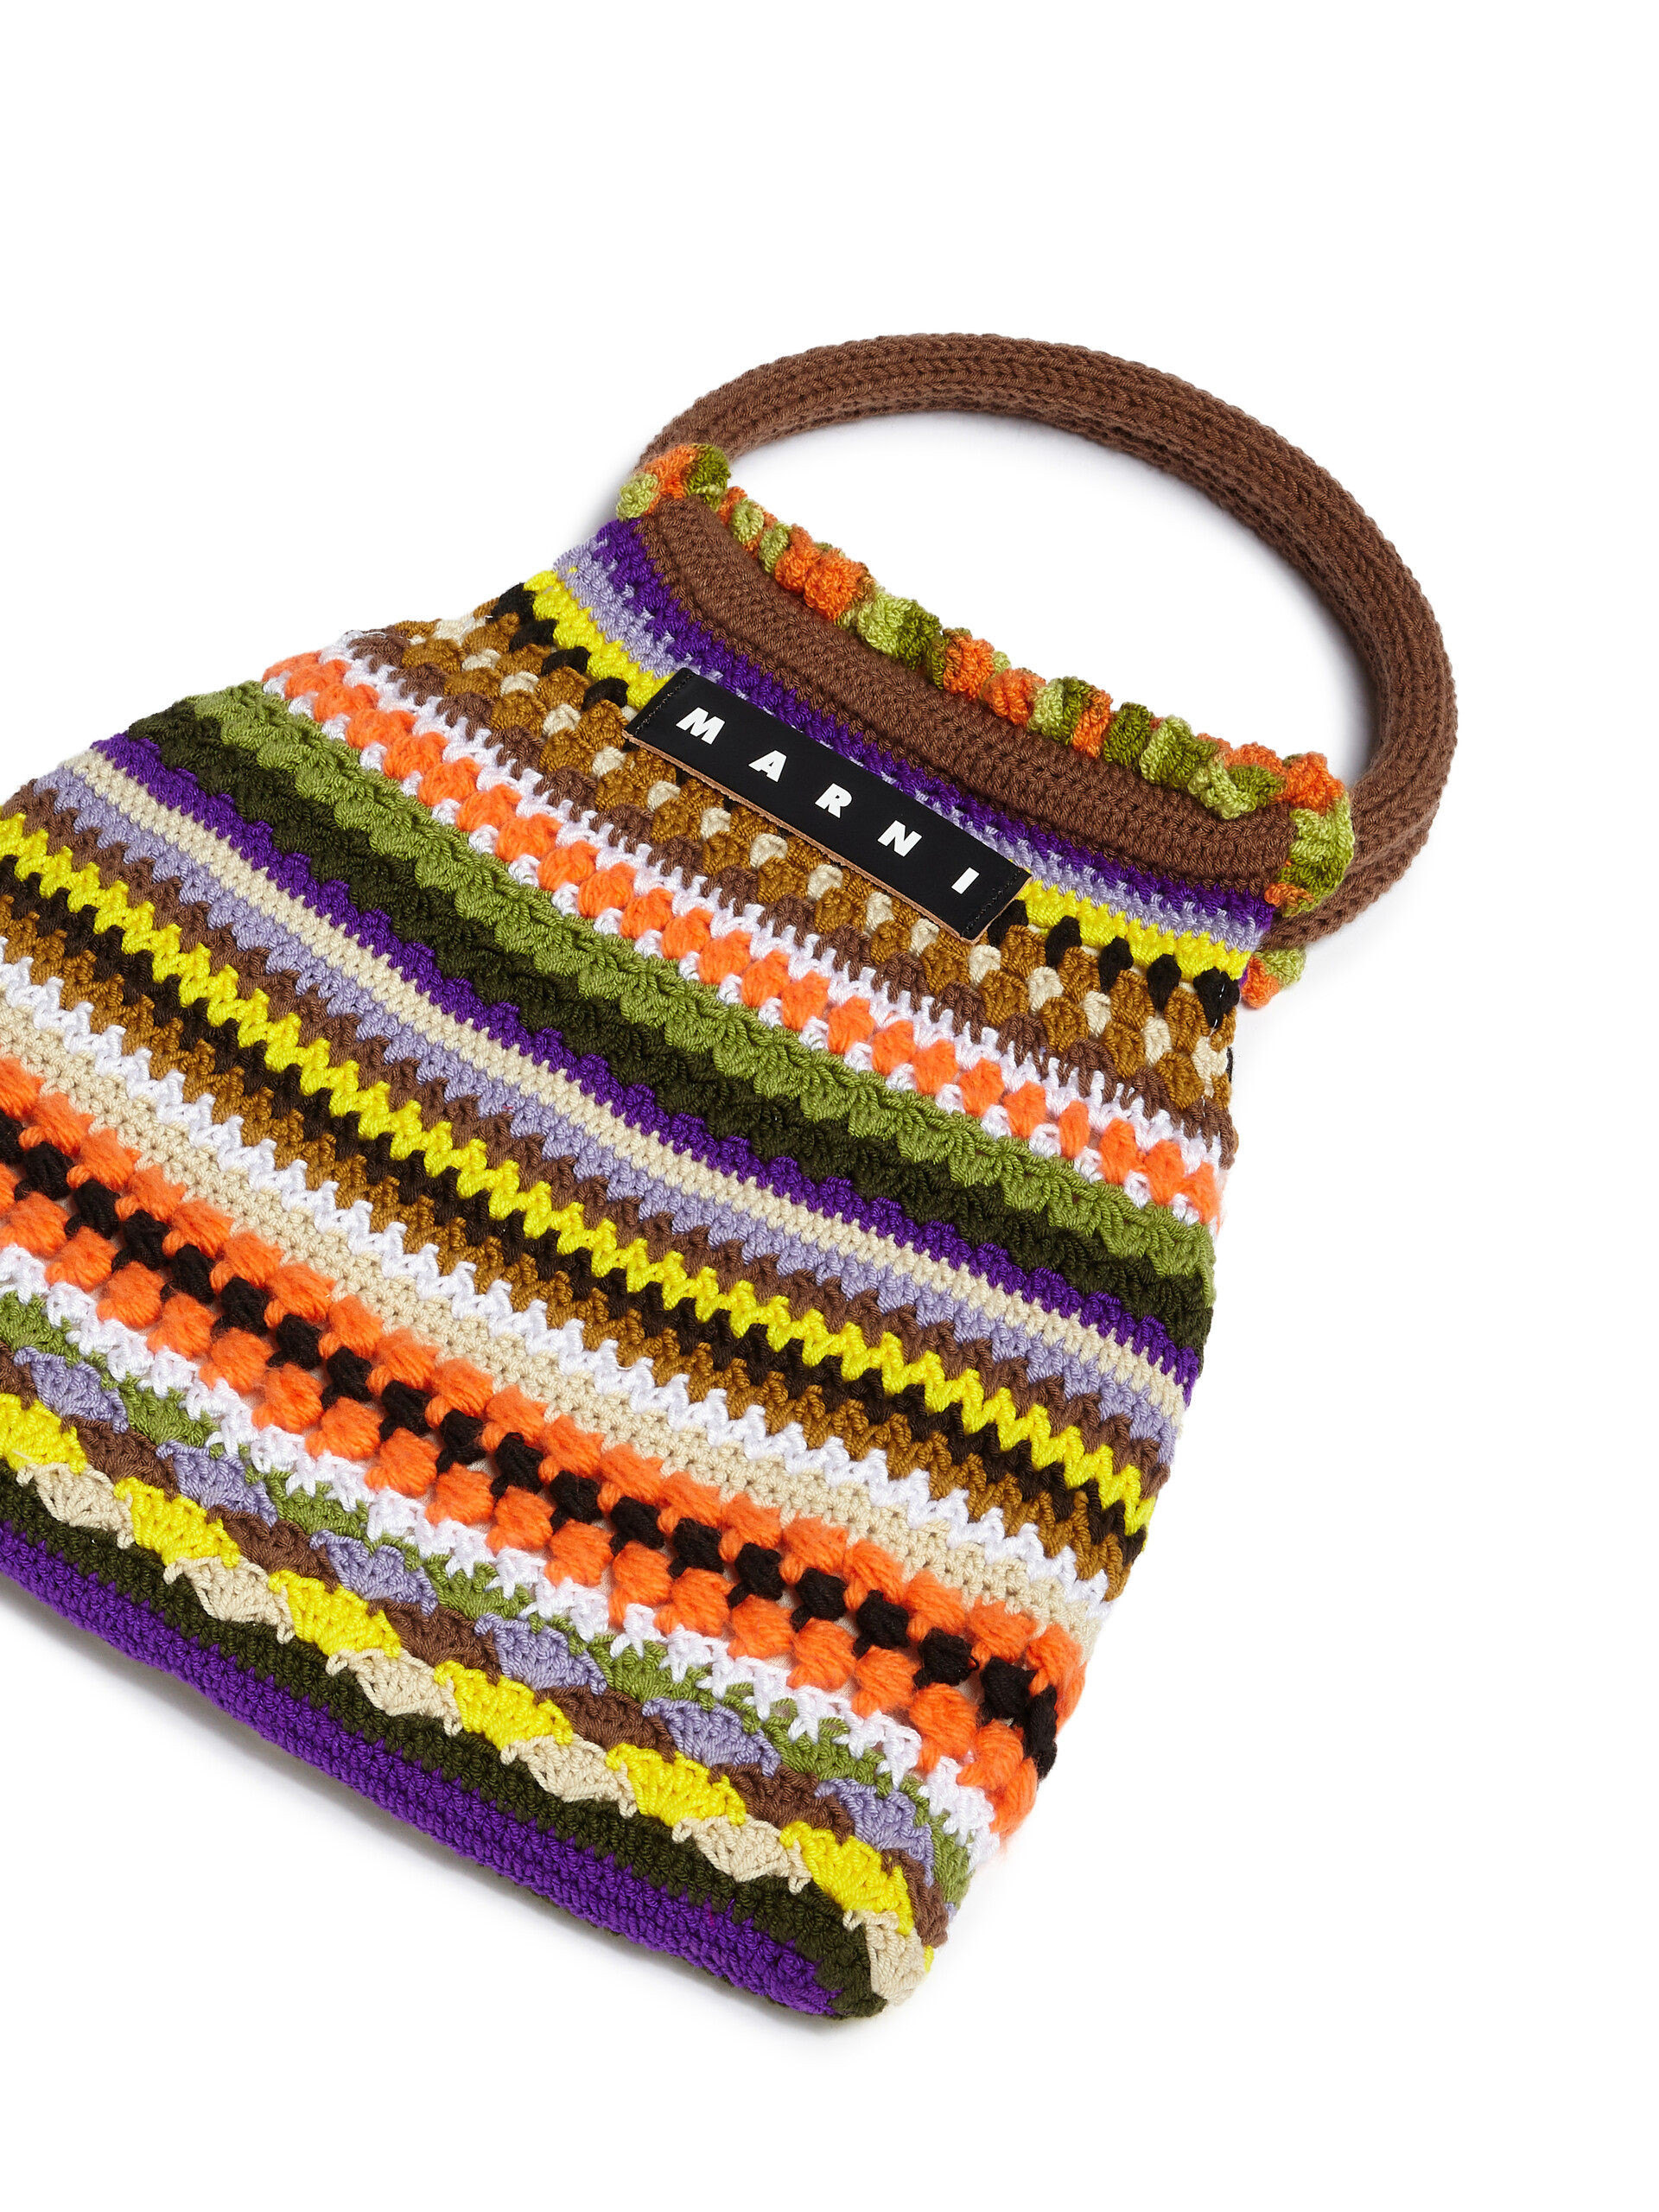 MARNI MARKET GRANNY bag in brown crochet - Furniture - Image 4